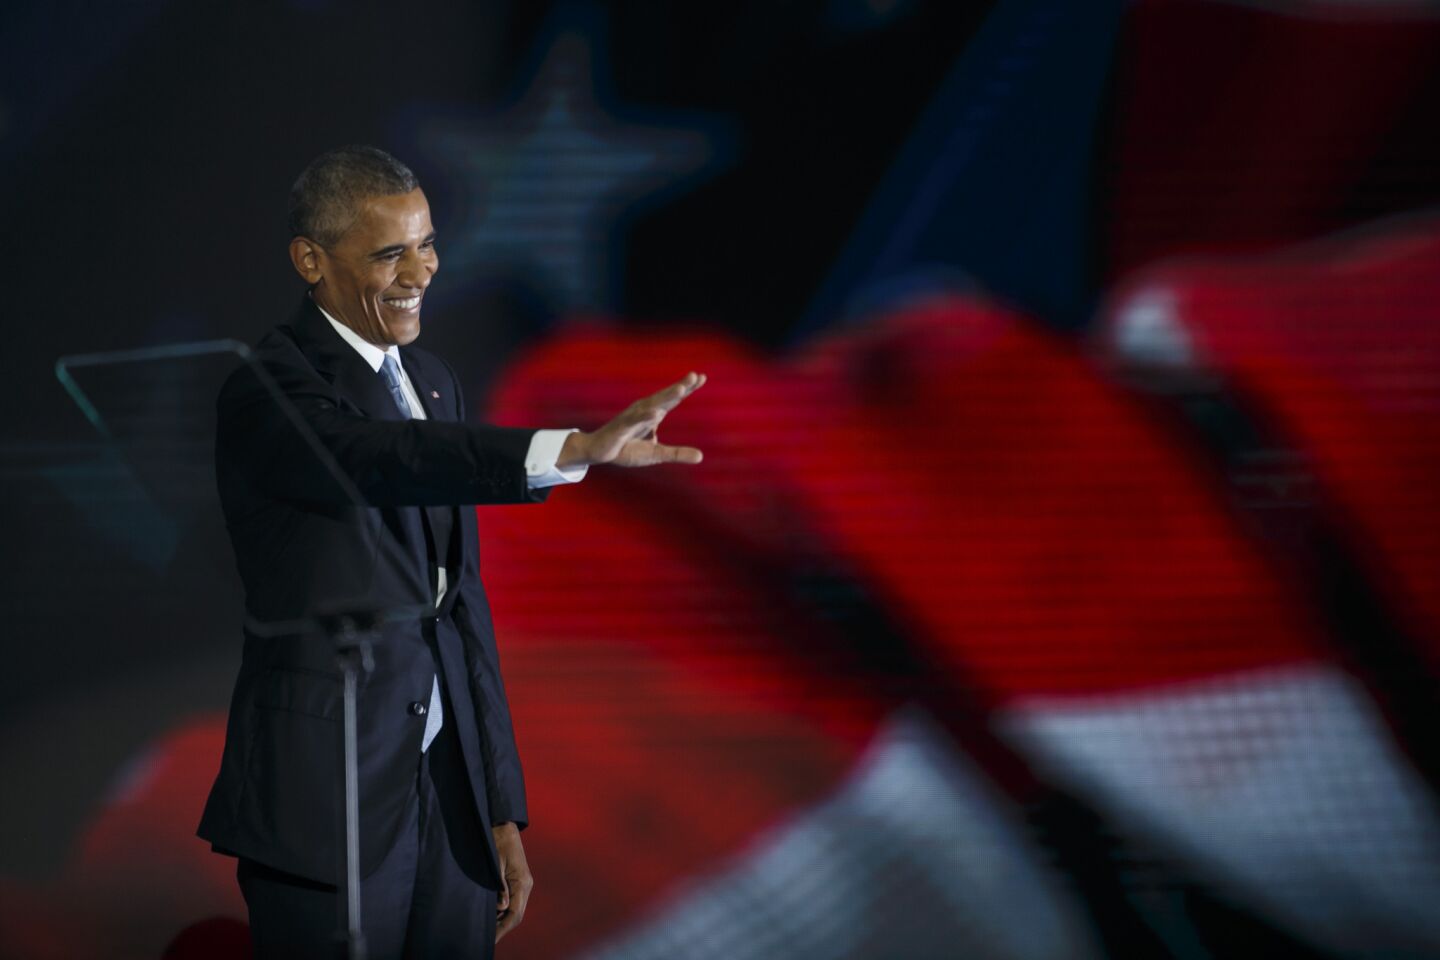 President Barack Obama arrives at the 2016 Democratic National Convention in Philadelphia.